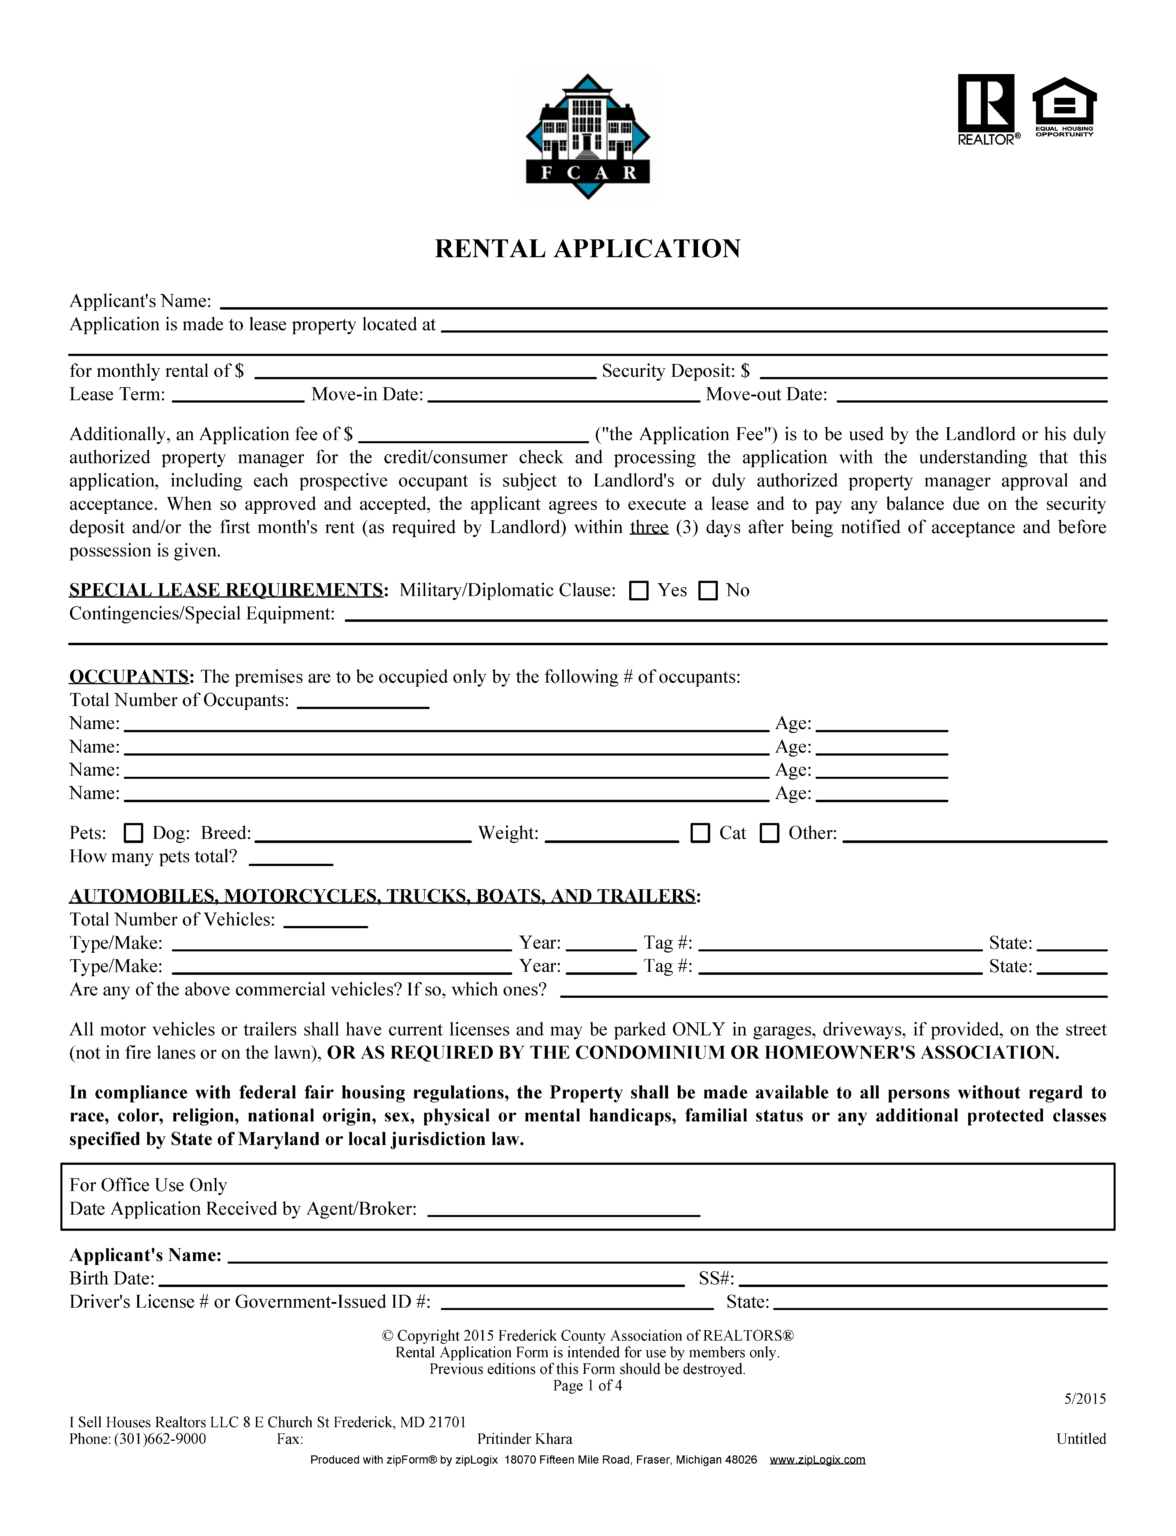 Maryland Rental Application Form Download Printable Pdf Templateroller ...